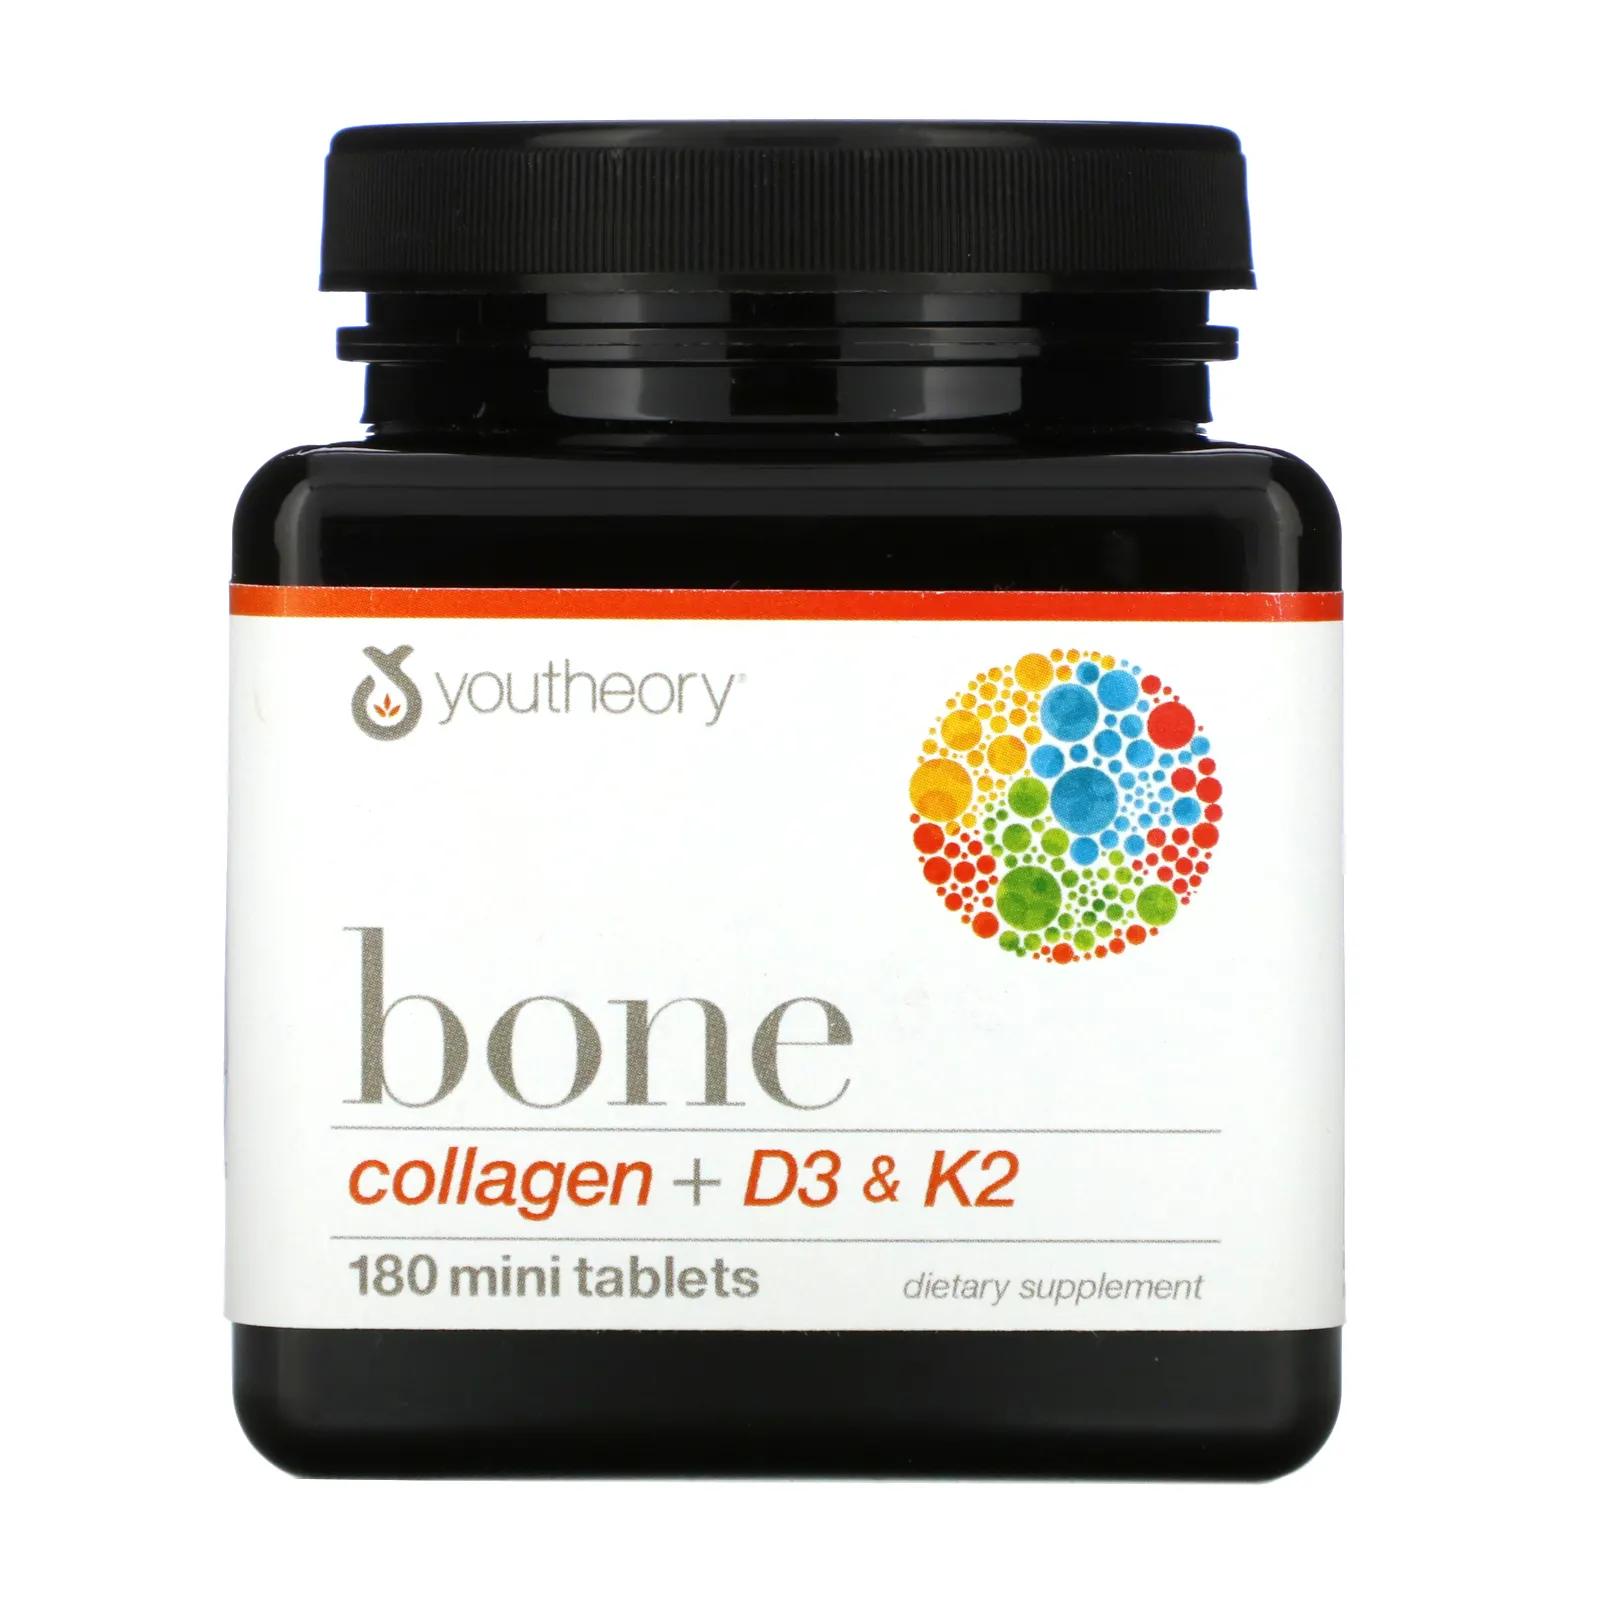 Youtheory Bone Collagen + D3 & K2 180 Mini Tablets